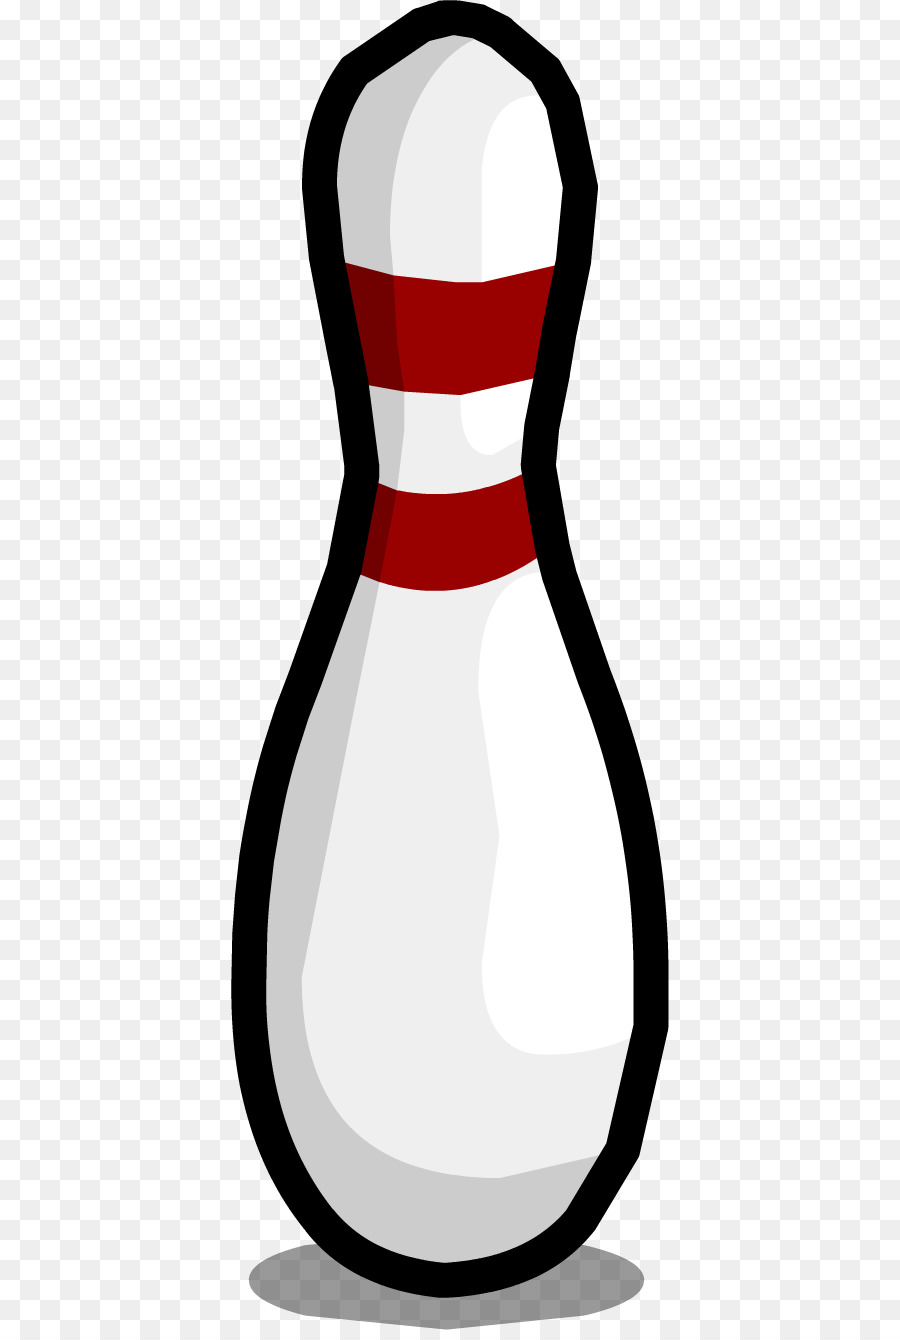 Club Penguin Bowling pin Clip art